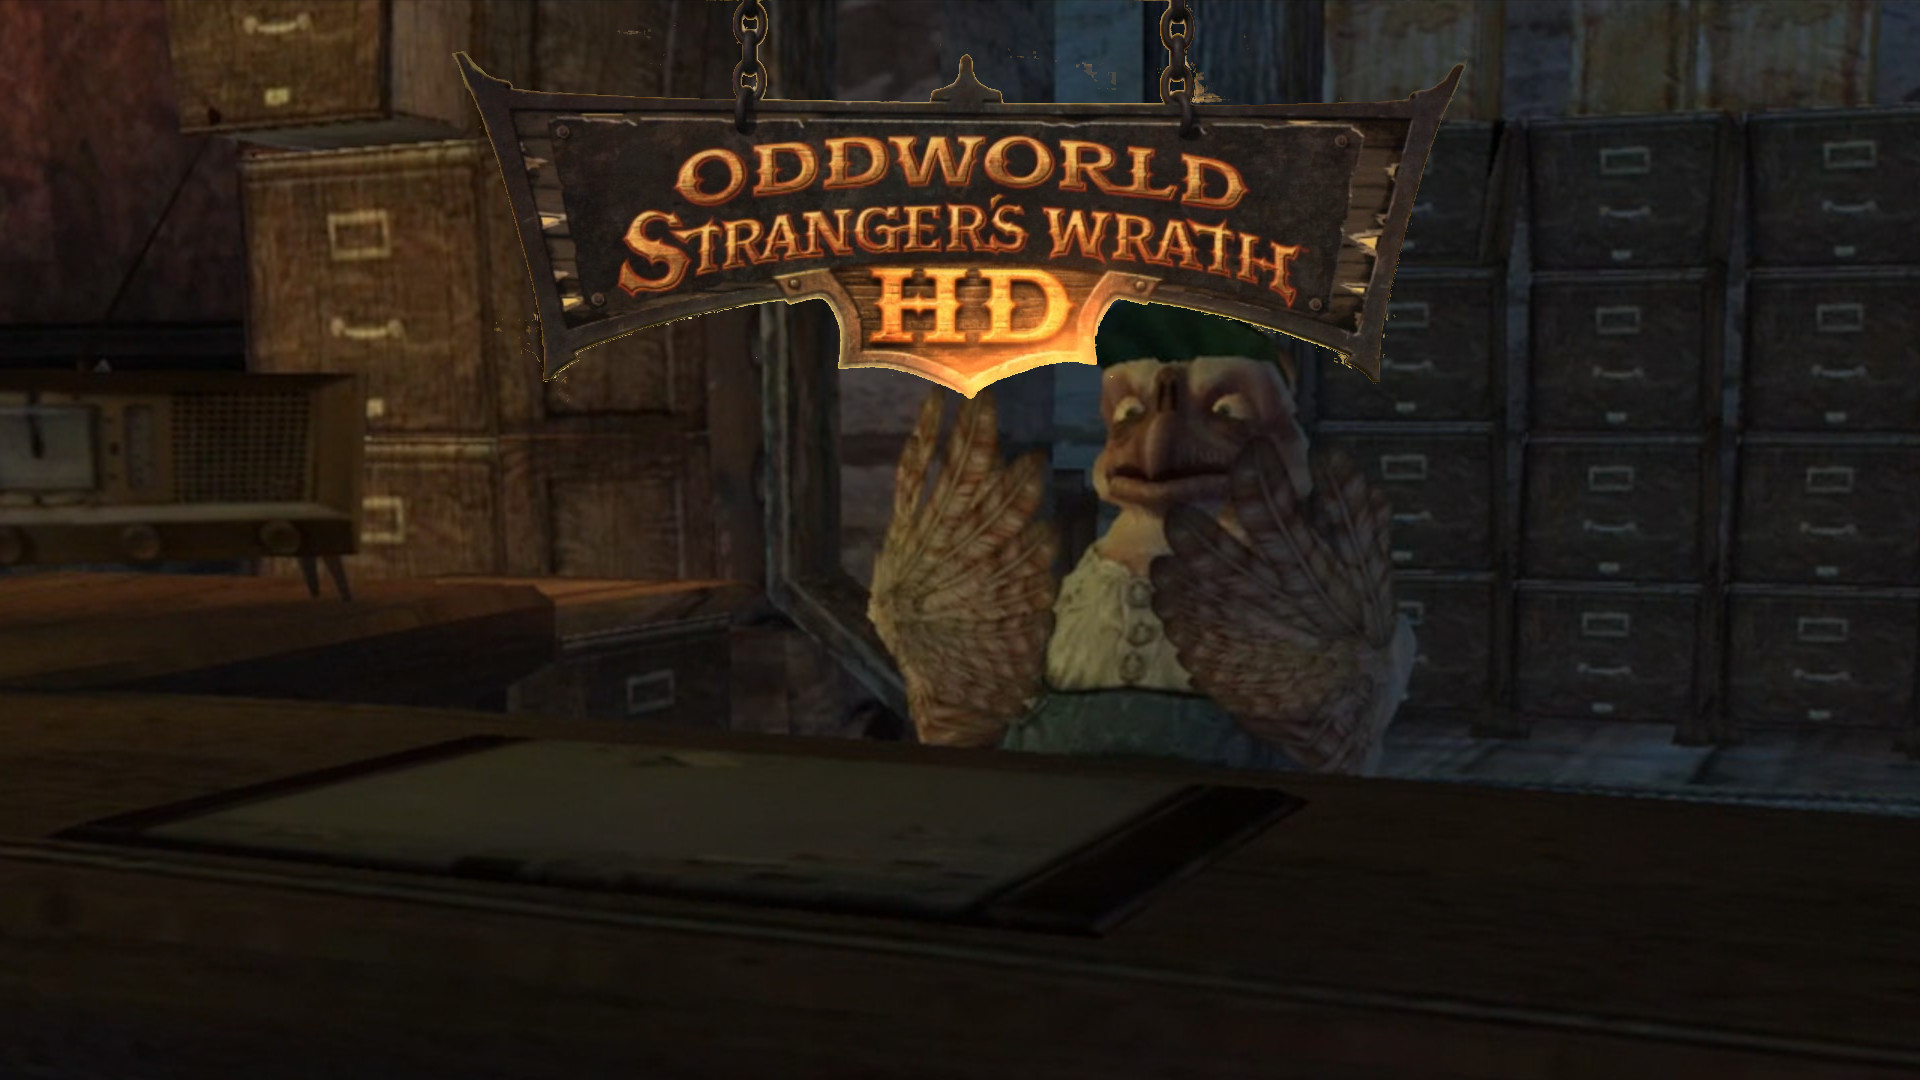 Oddworld Out – Let’s Play Oddworld: Stranger’s Wrath Part One